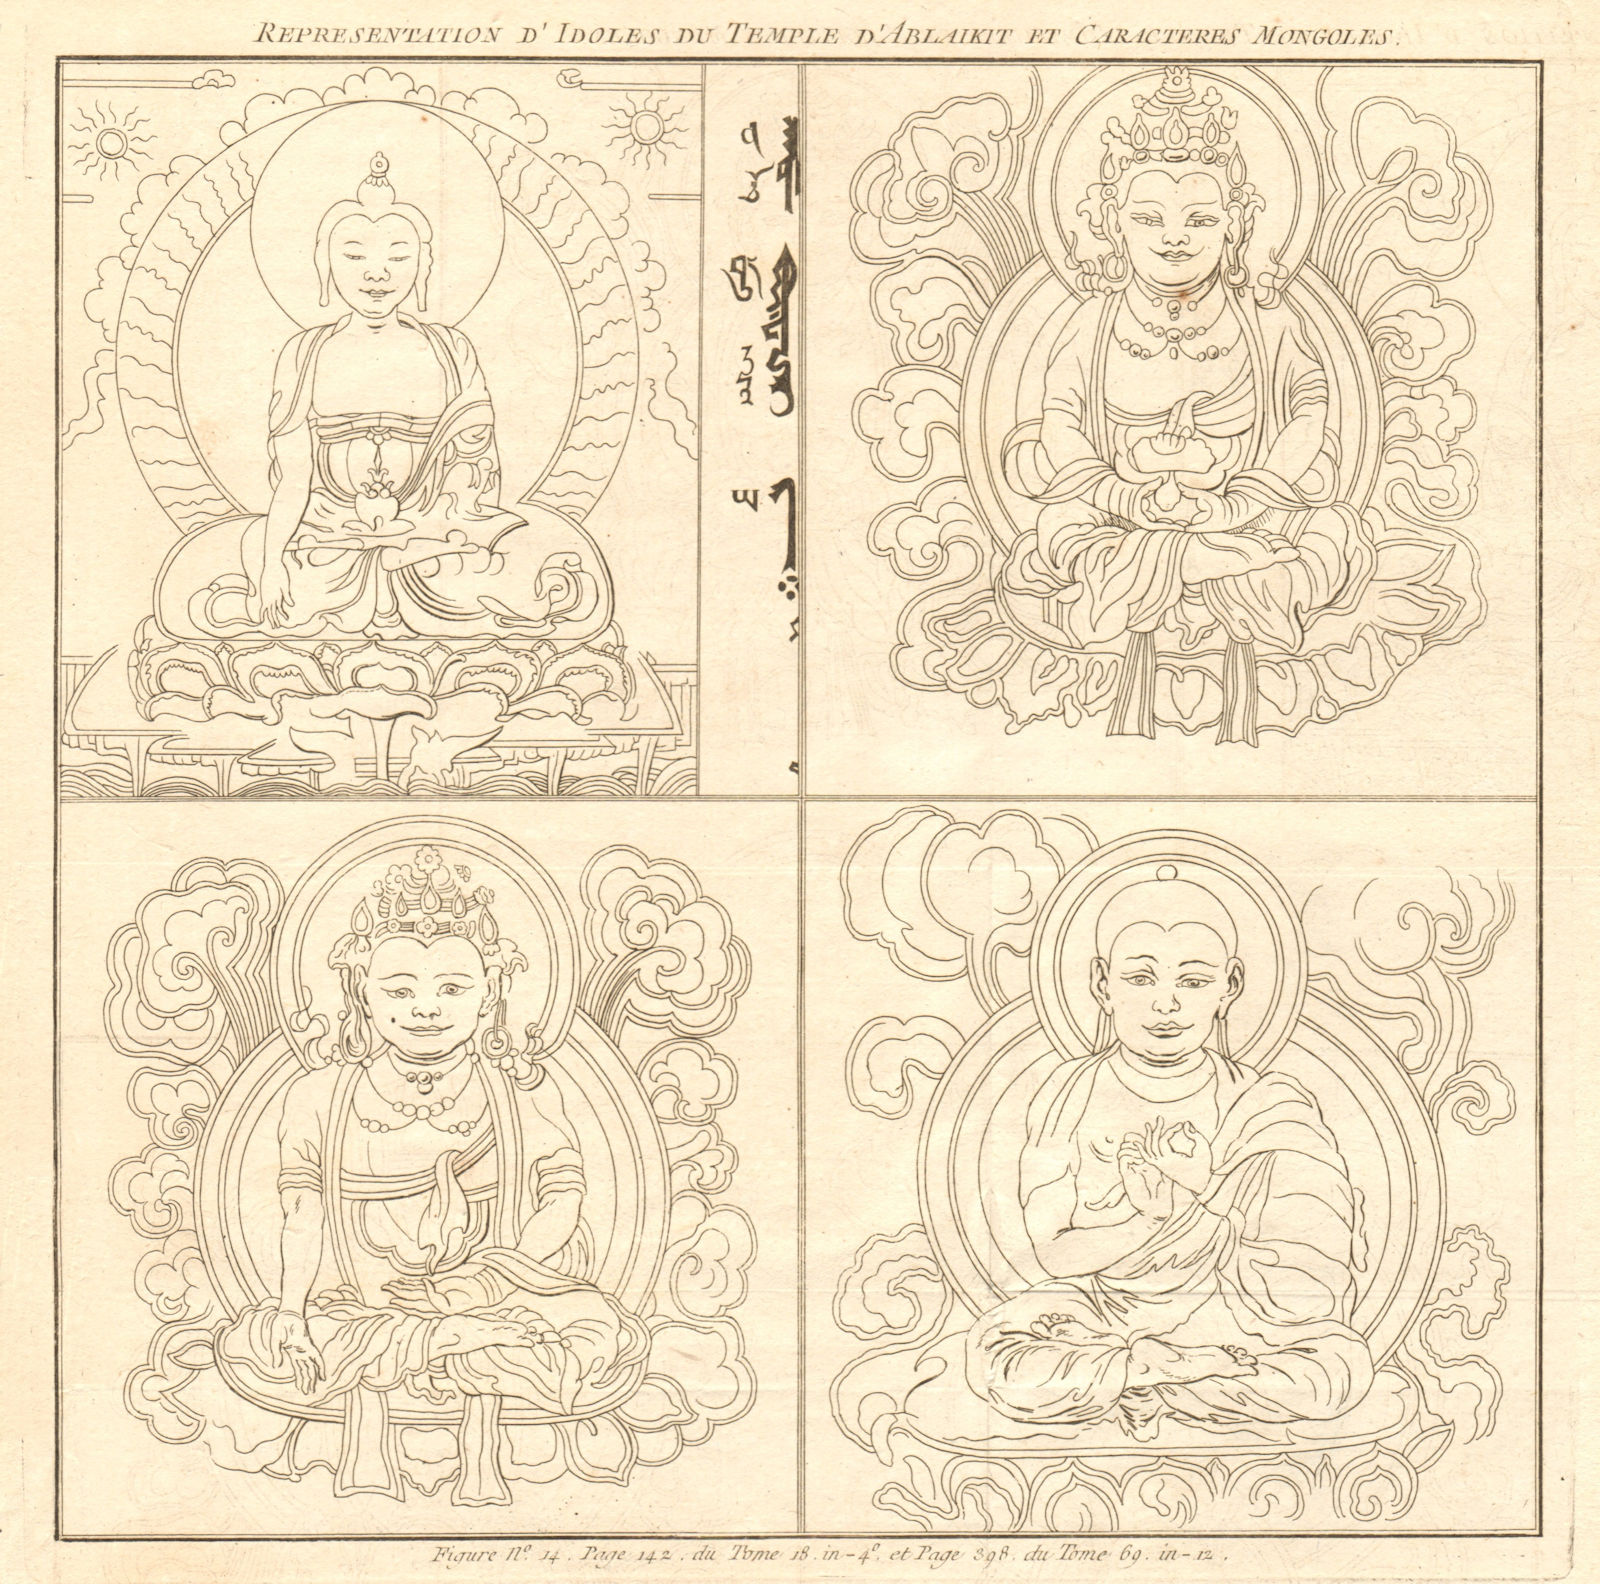 'Idoles du Temple d'Ablaikit'. Ablaykit buddhist temple idols. Kazakhstan 1768